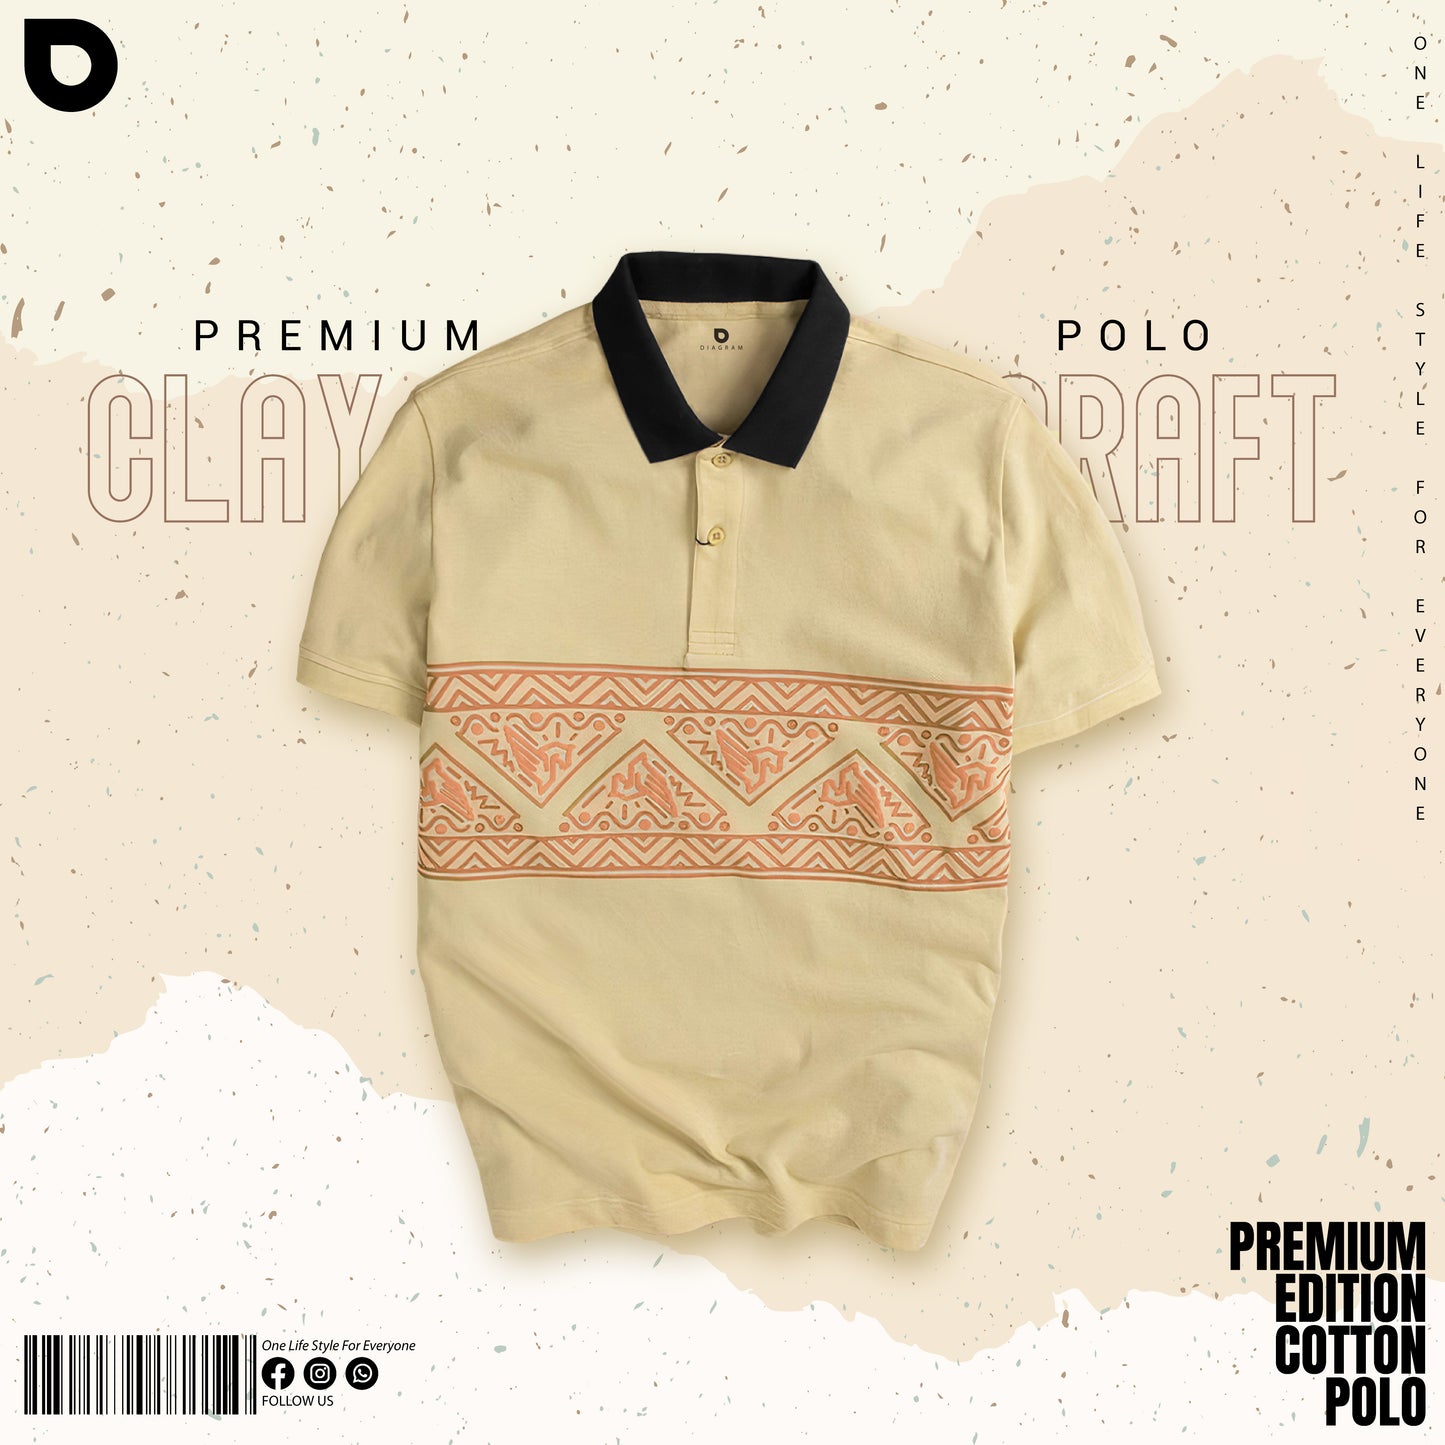 Polo Shirt | Clay Craft (PD-22)